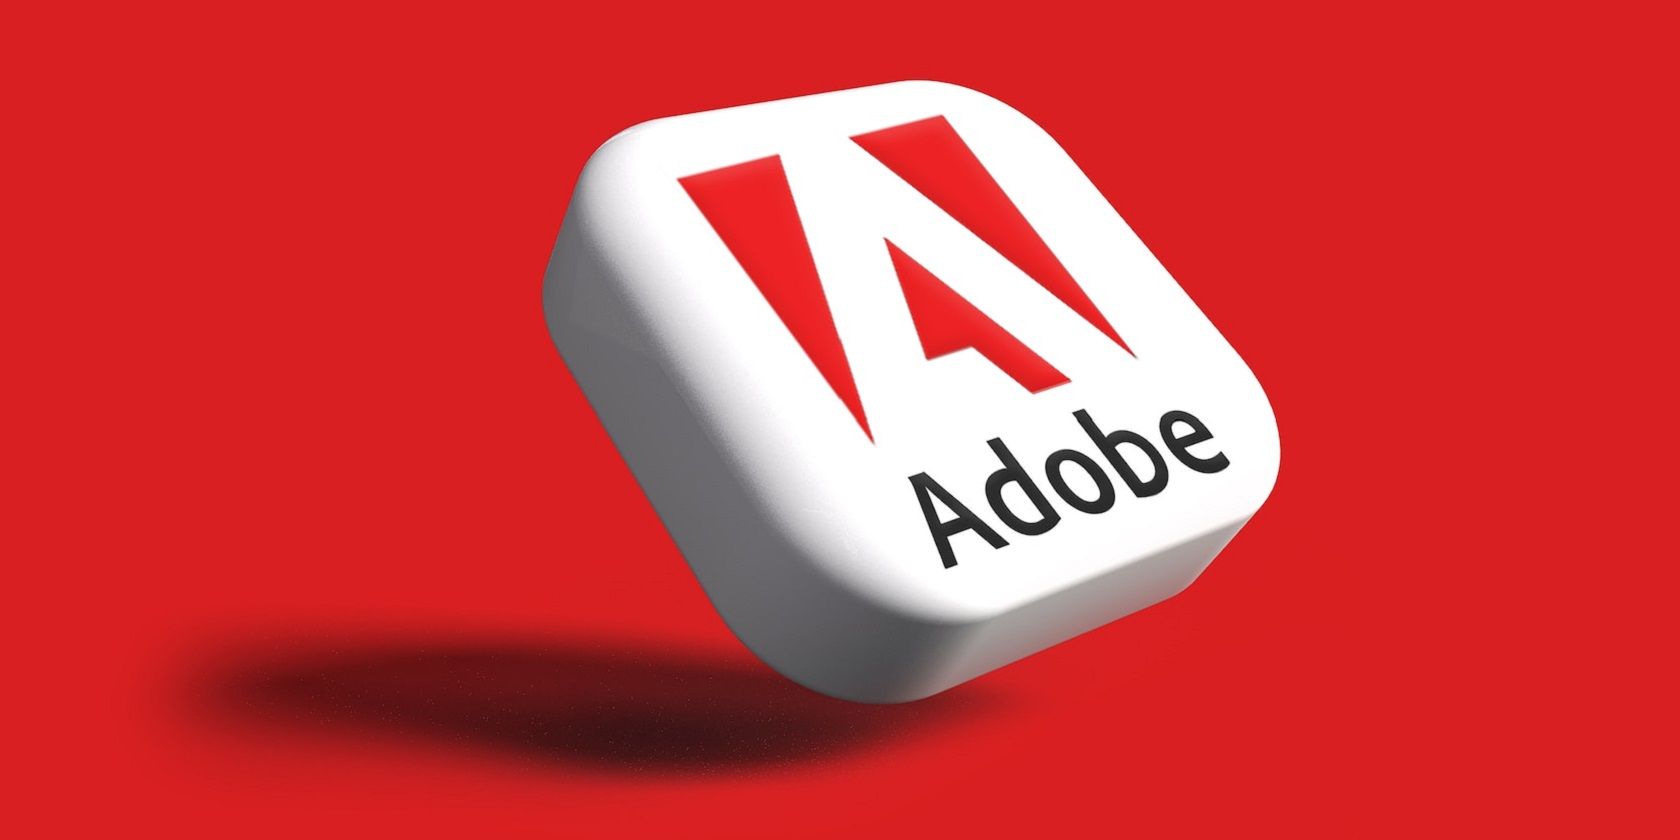 the adobe logo